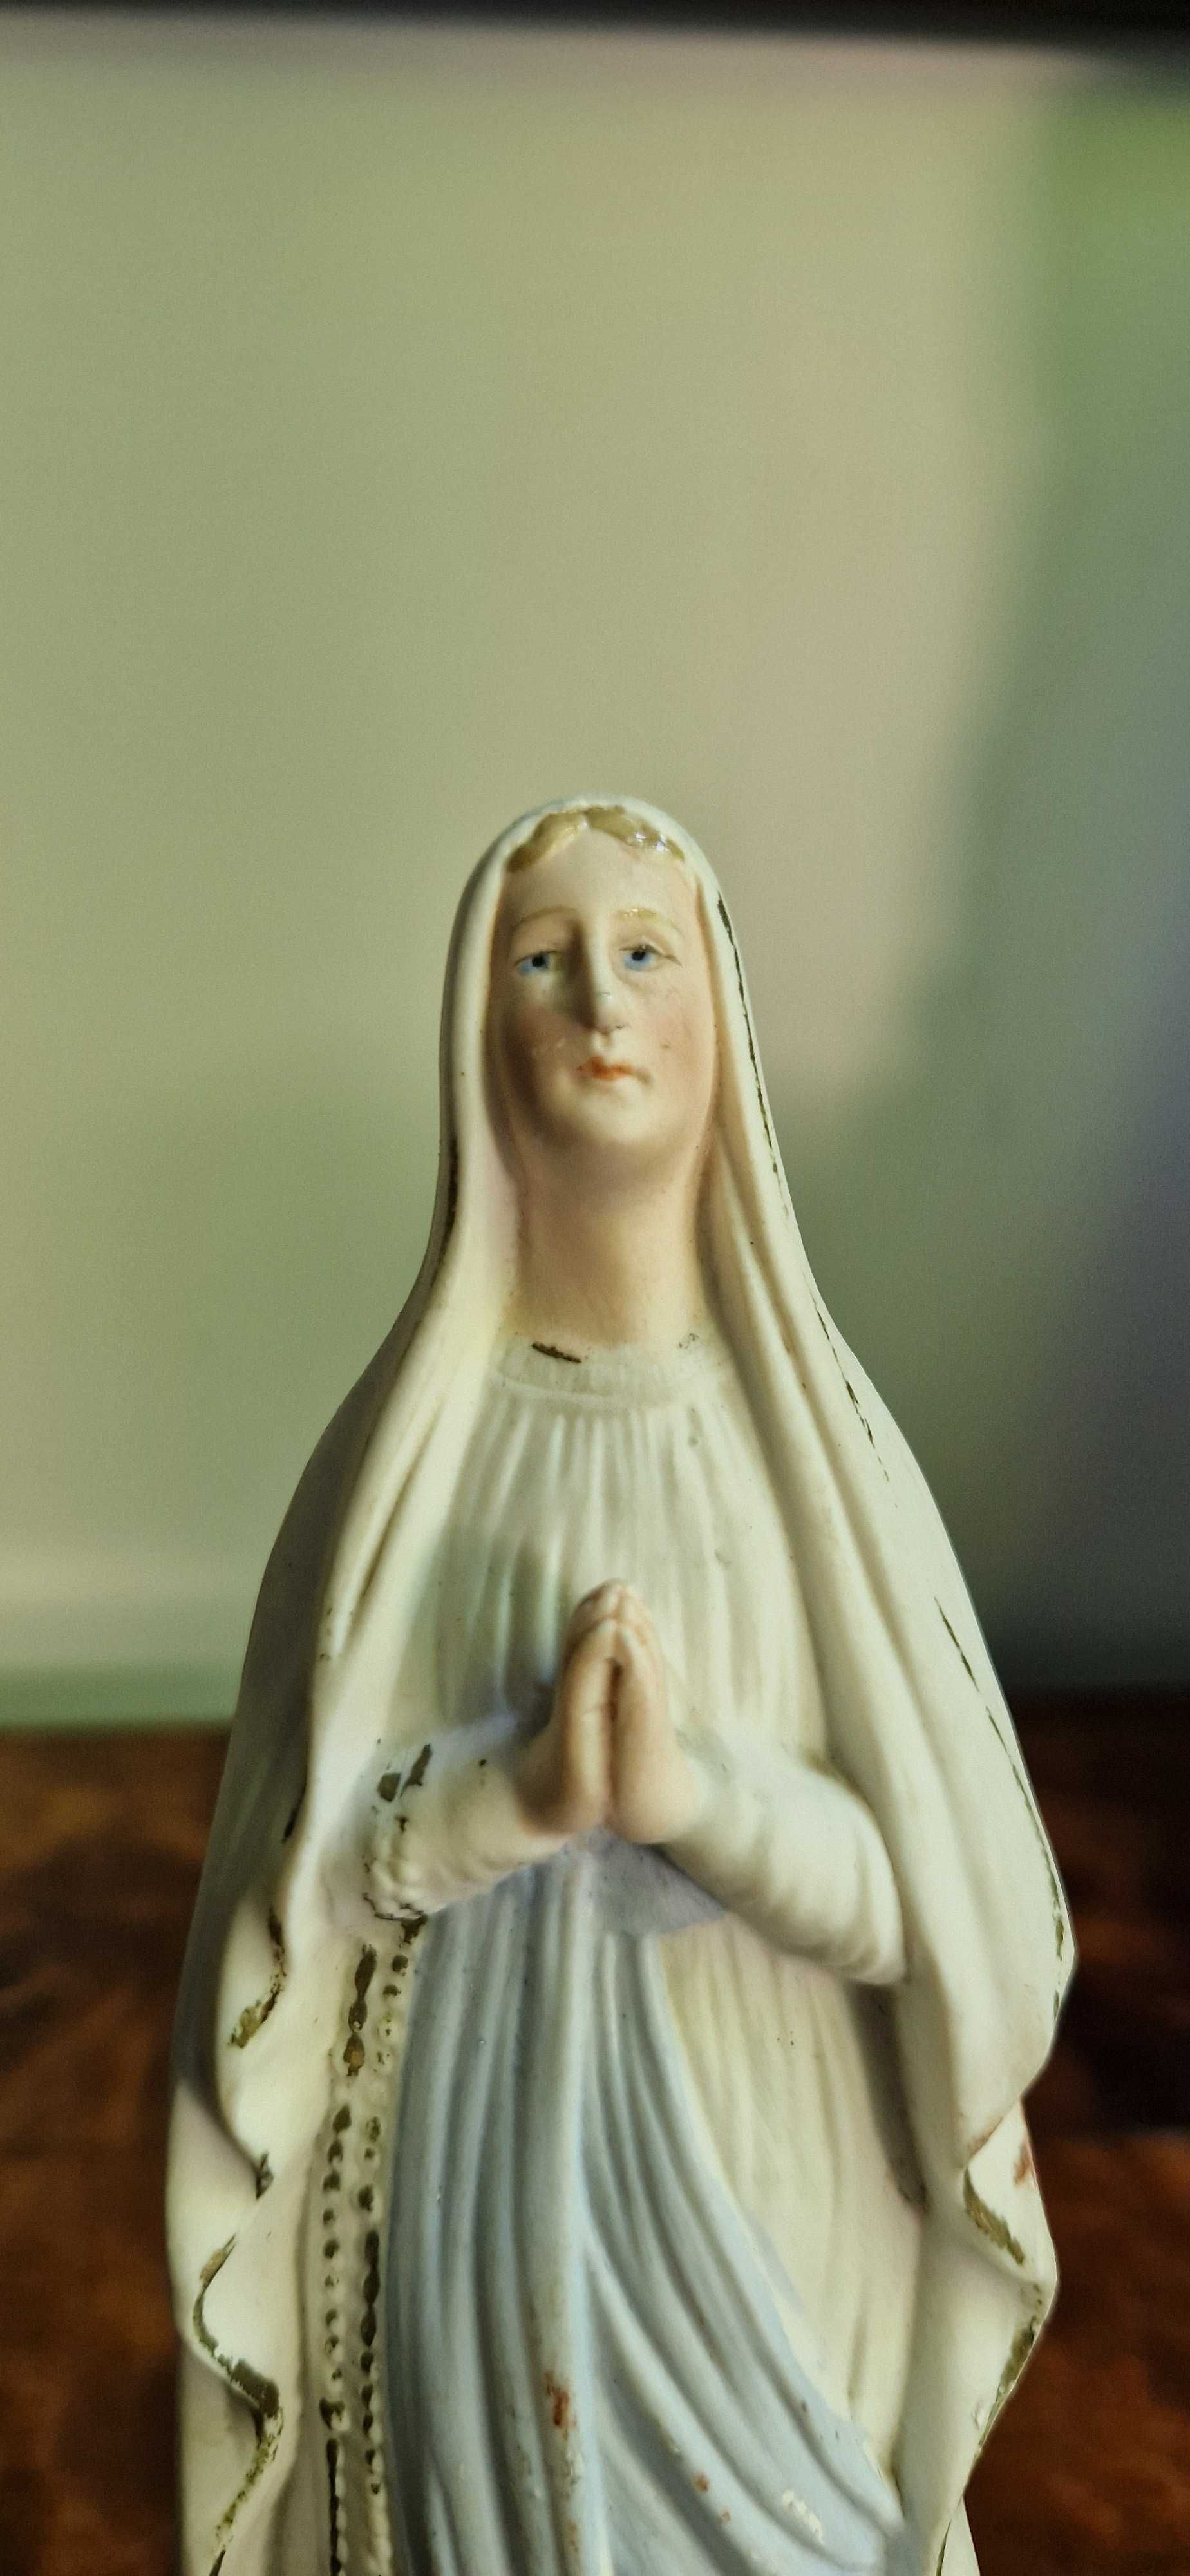 Matka Boska Lourdes porcelana biskwit antyk Francja dewocjonalia cudo